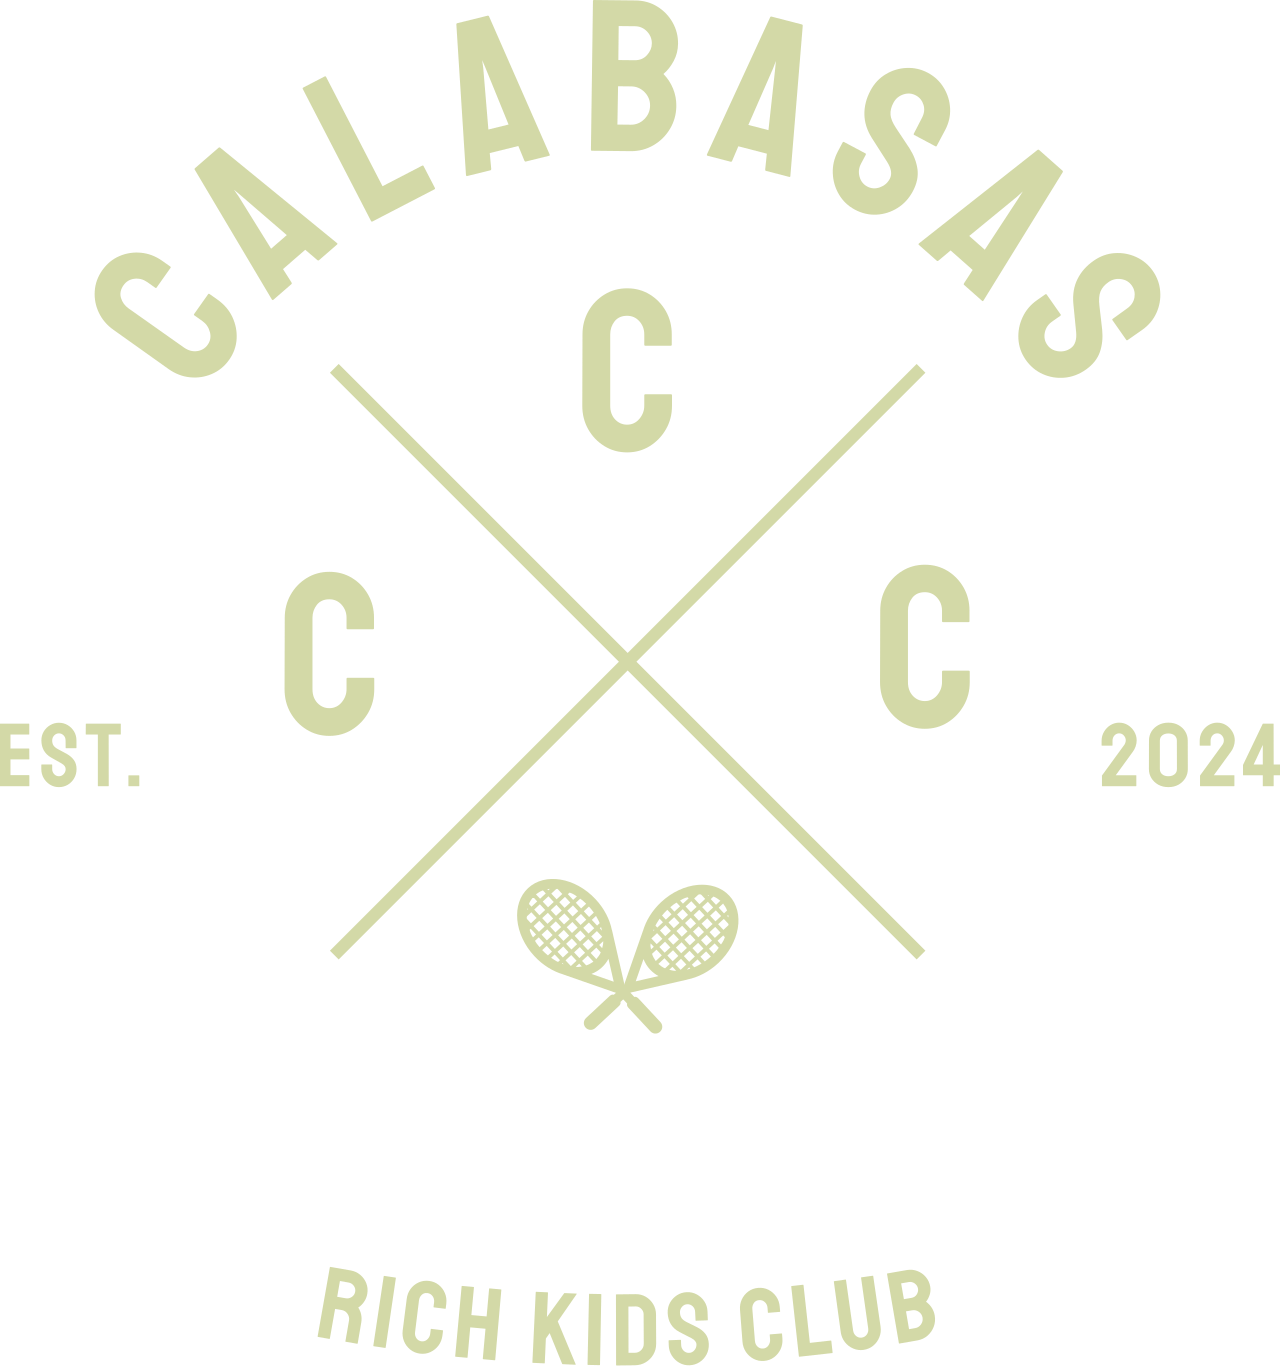 Calabasas's logo